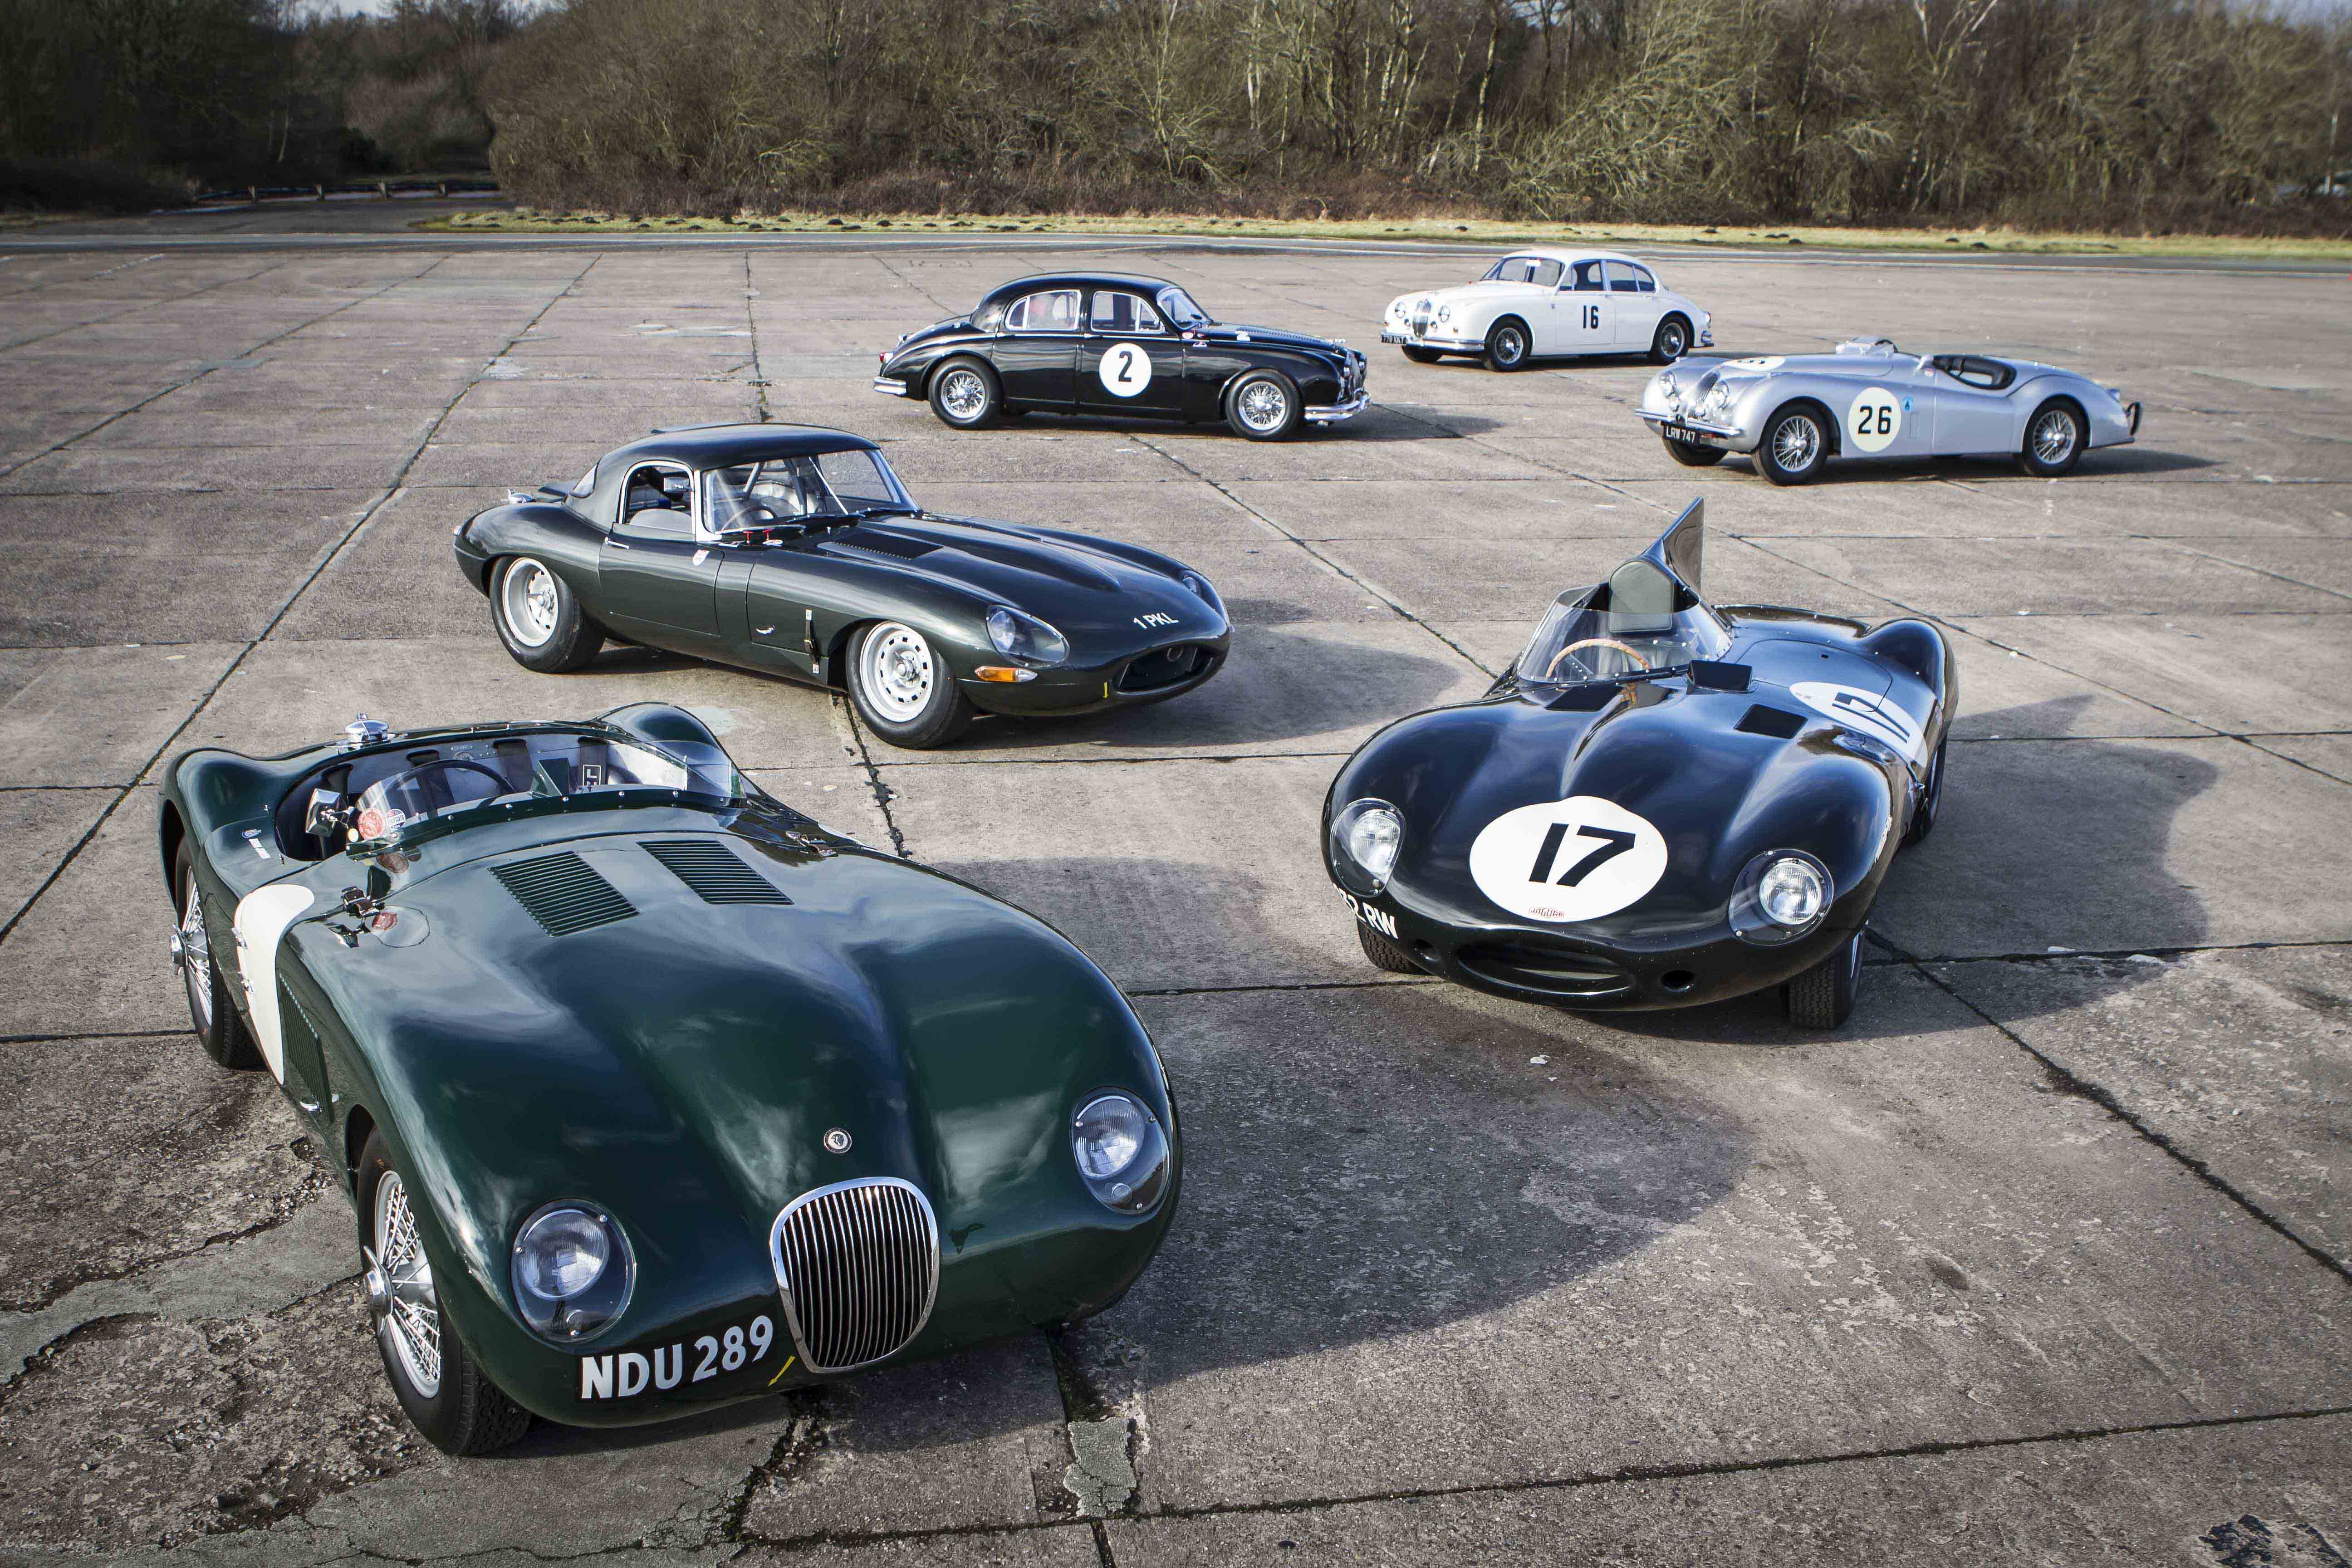 Jaguar Land Rover compra inmensa colección de autos clásicos británicos!